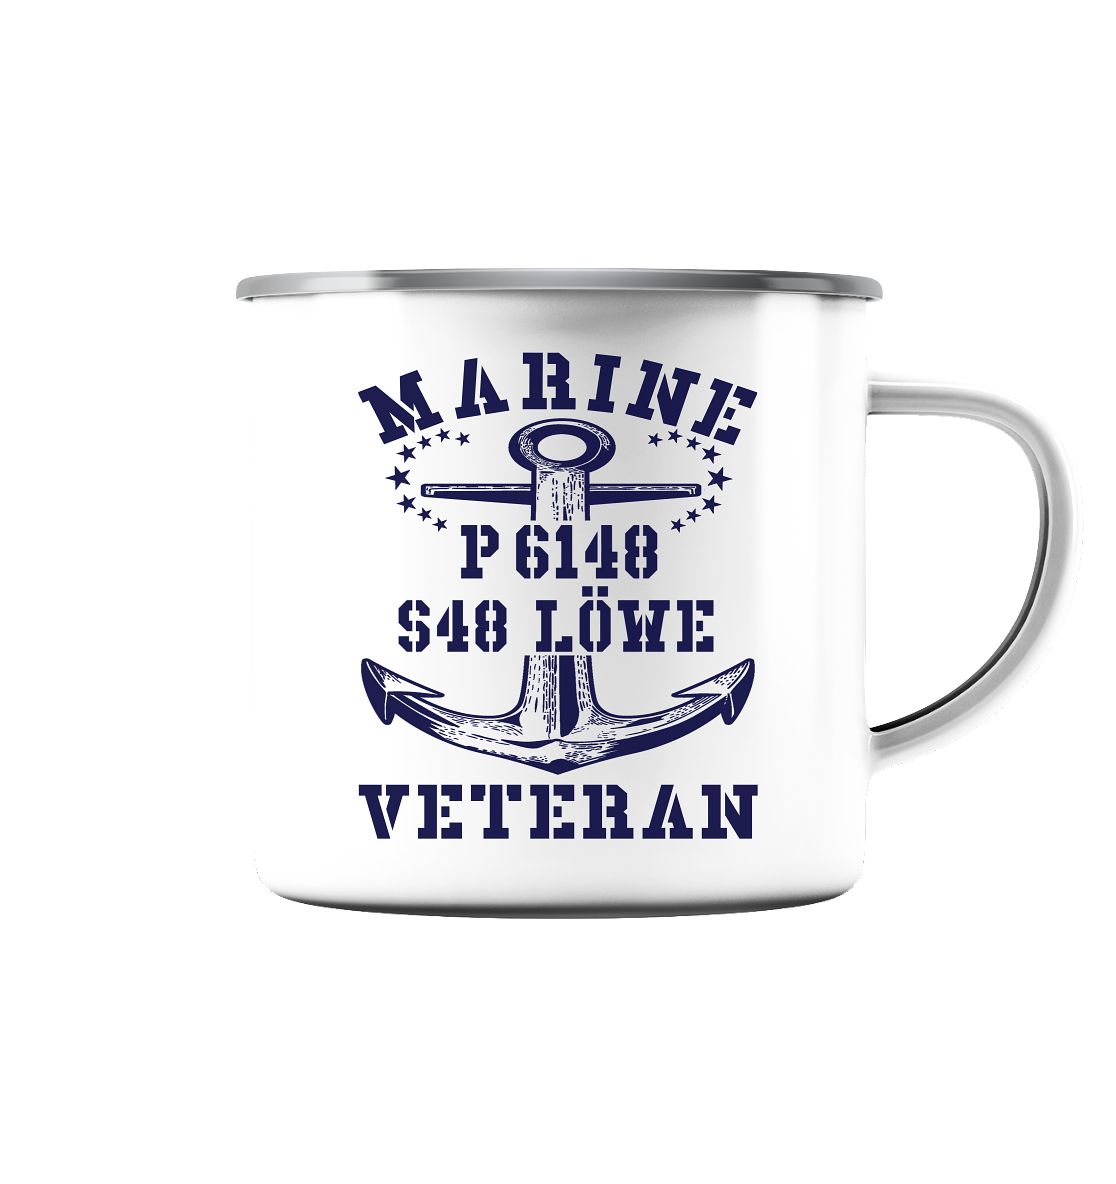 P6148 S48 LÖWE Marine Veteran - Emaille Tasse (Silber)